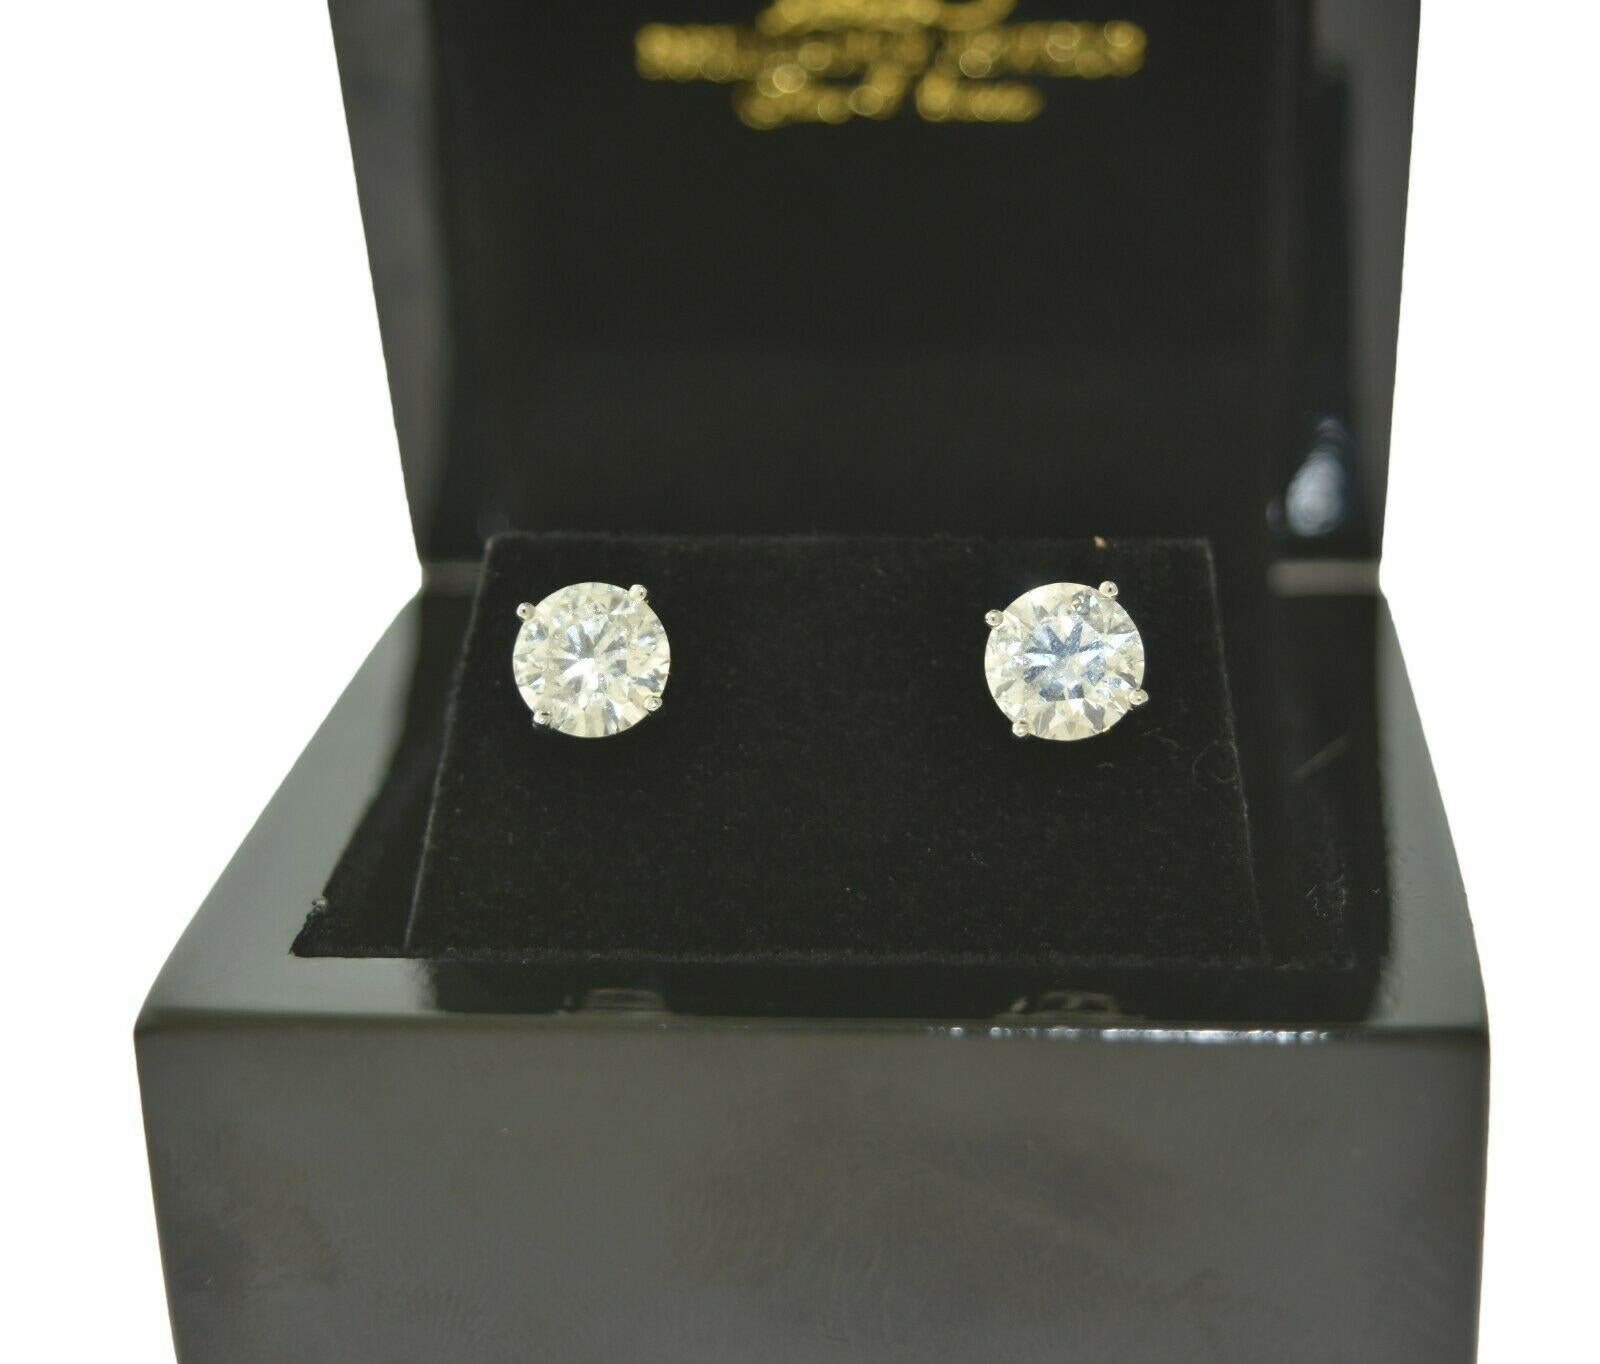 Women's or Men's 3.11 Total Carat Weight Brilliant Cut Diamond Stud Earrings in White Gold